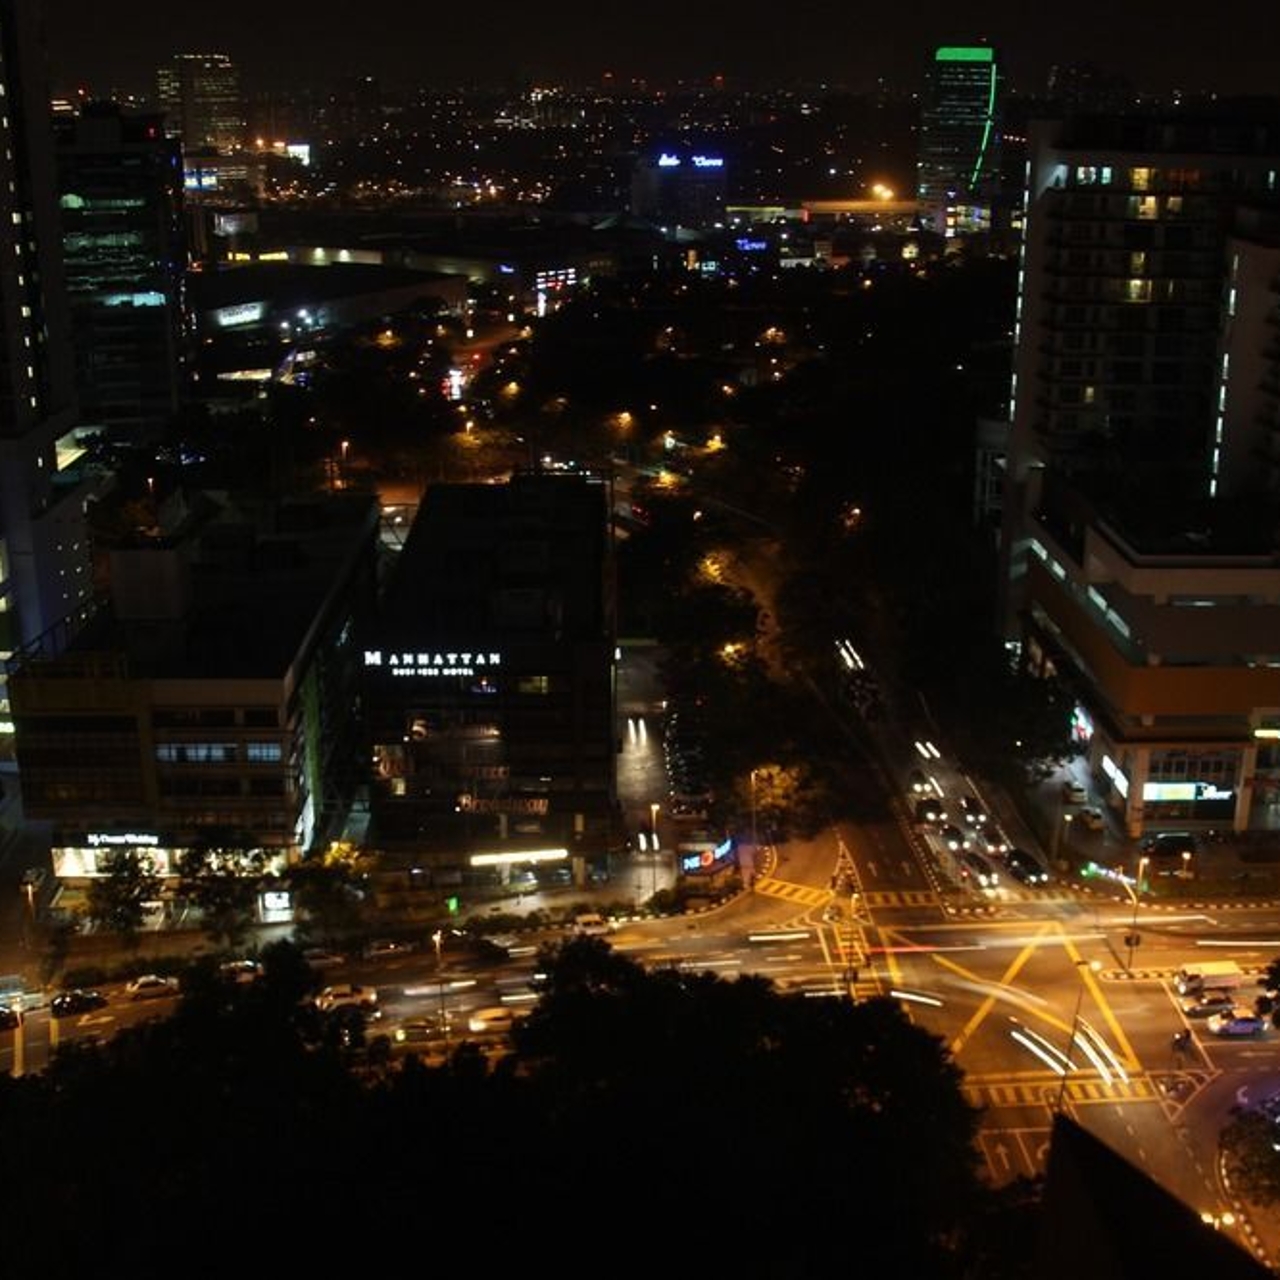 Hotel Qliq Damansara Petaling Jaya Selangor At Hrs With Free Services